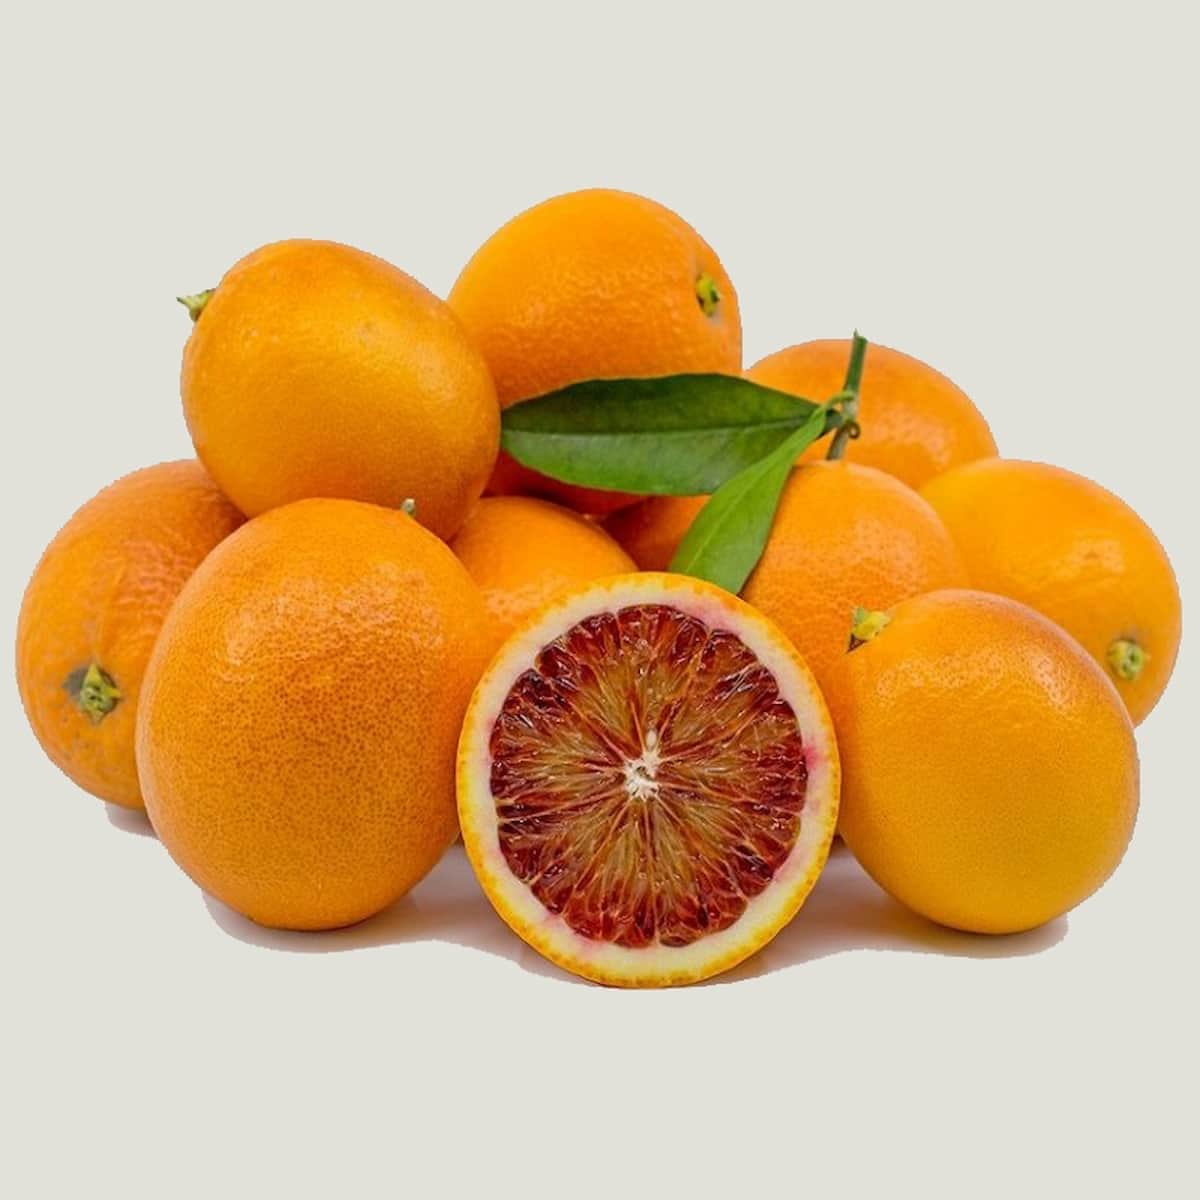 پرتقال تامسون شمال